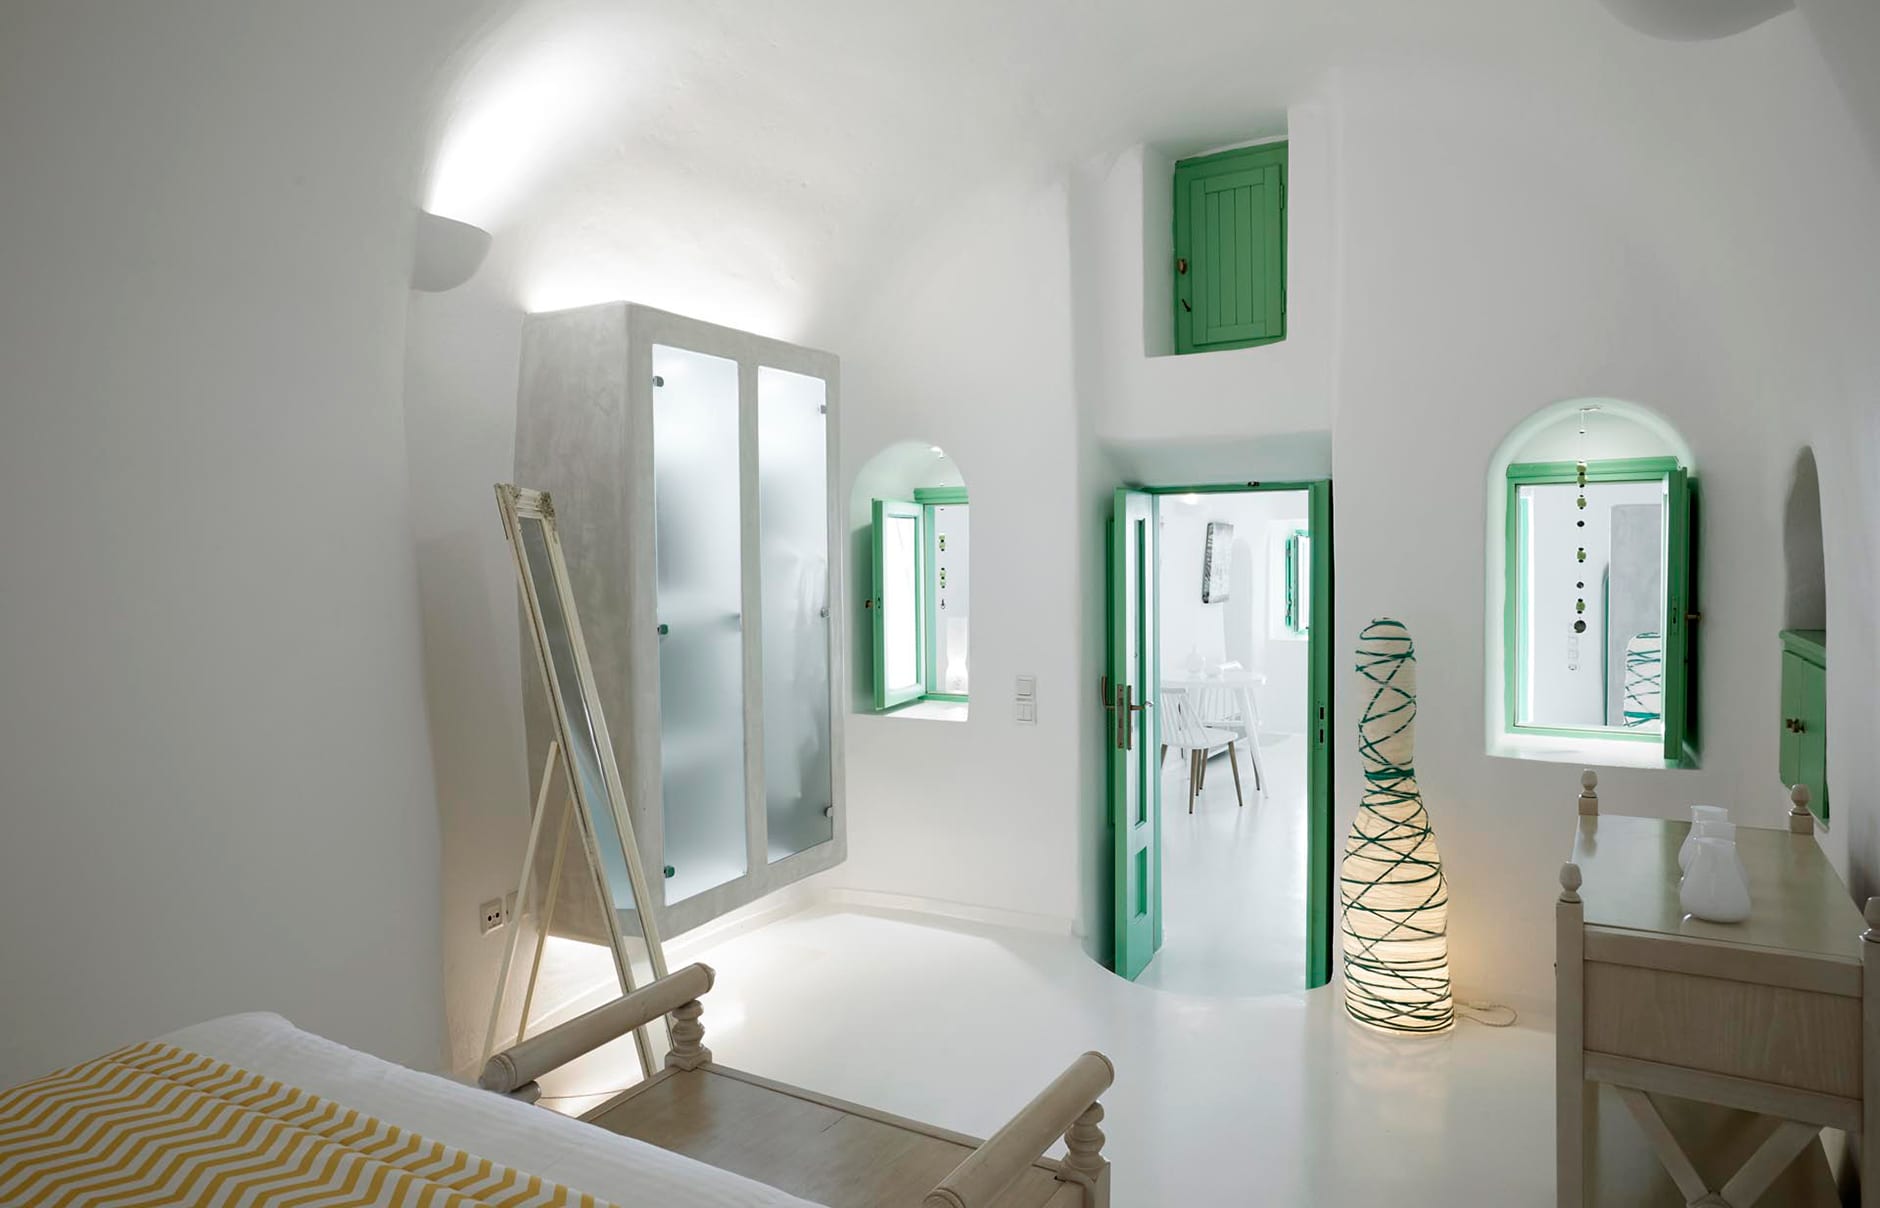 Dreams Luxury Suites, Santorini. Hotel Review by TravelPlusStyle. Photo © Dreams Luxury Suites